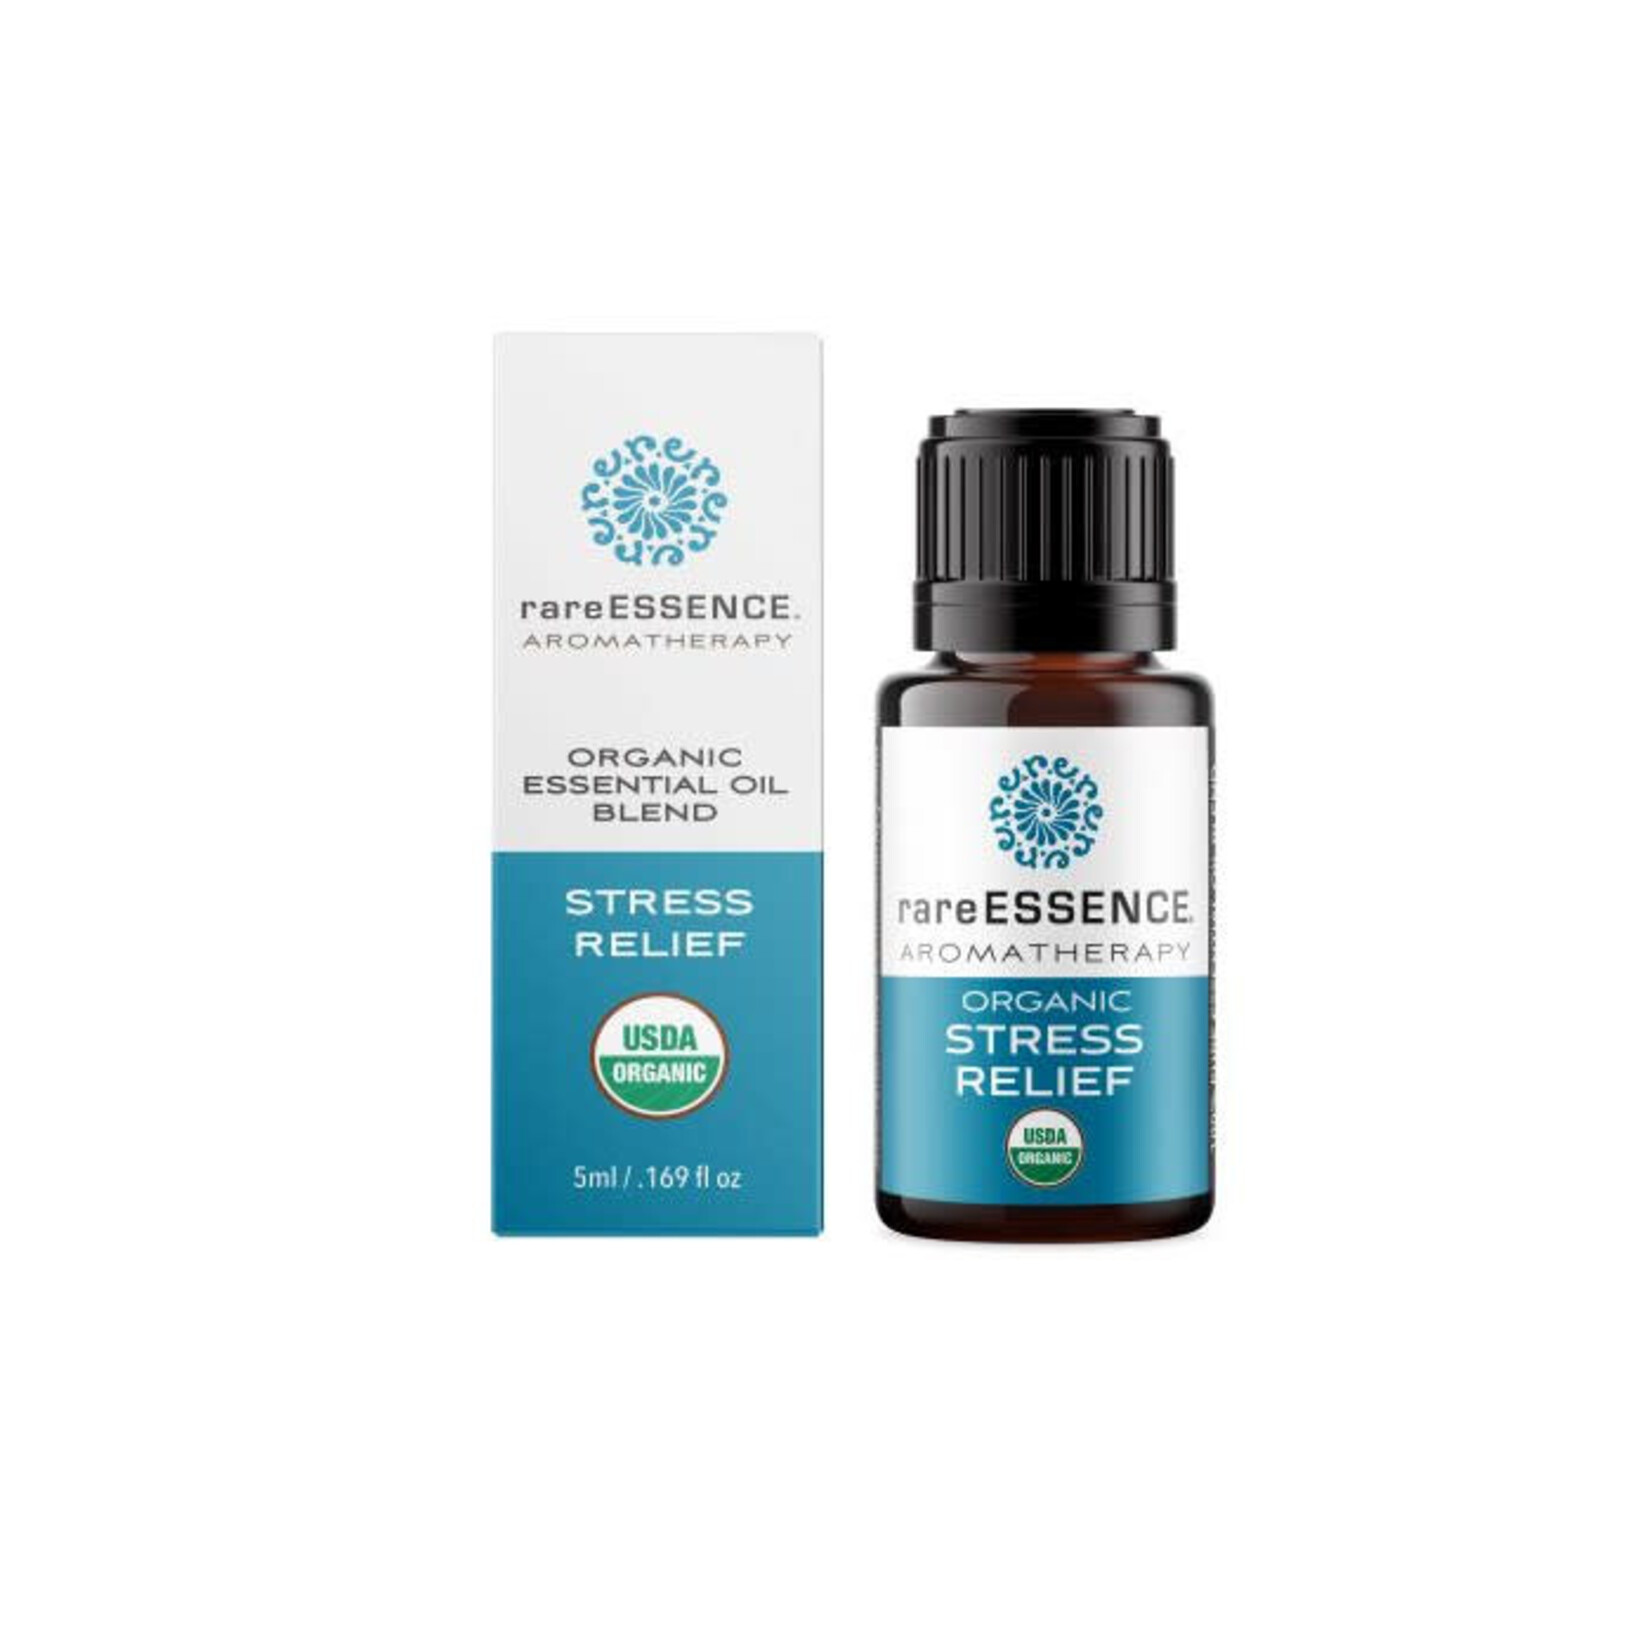 rareESSENCE Aromatherapy Organic Stress Relief Essential Oil Blend